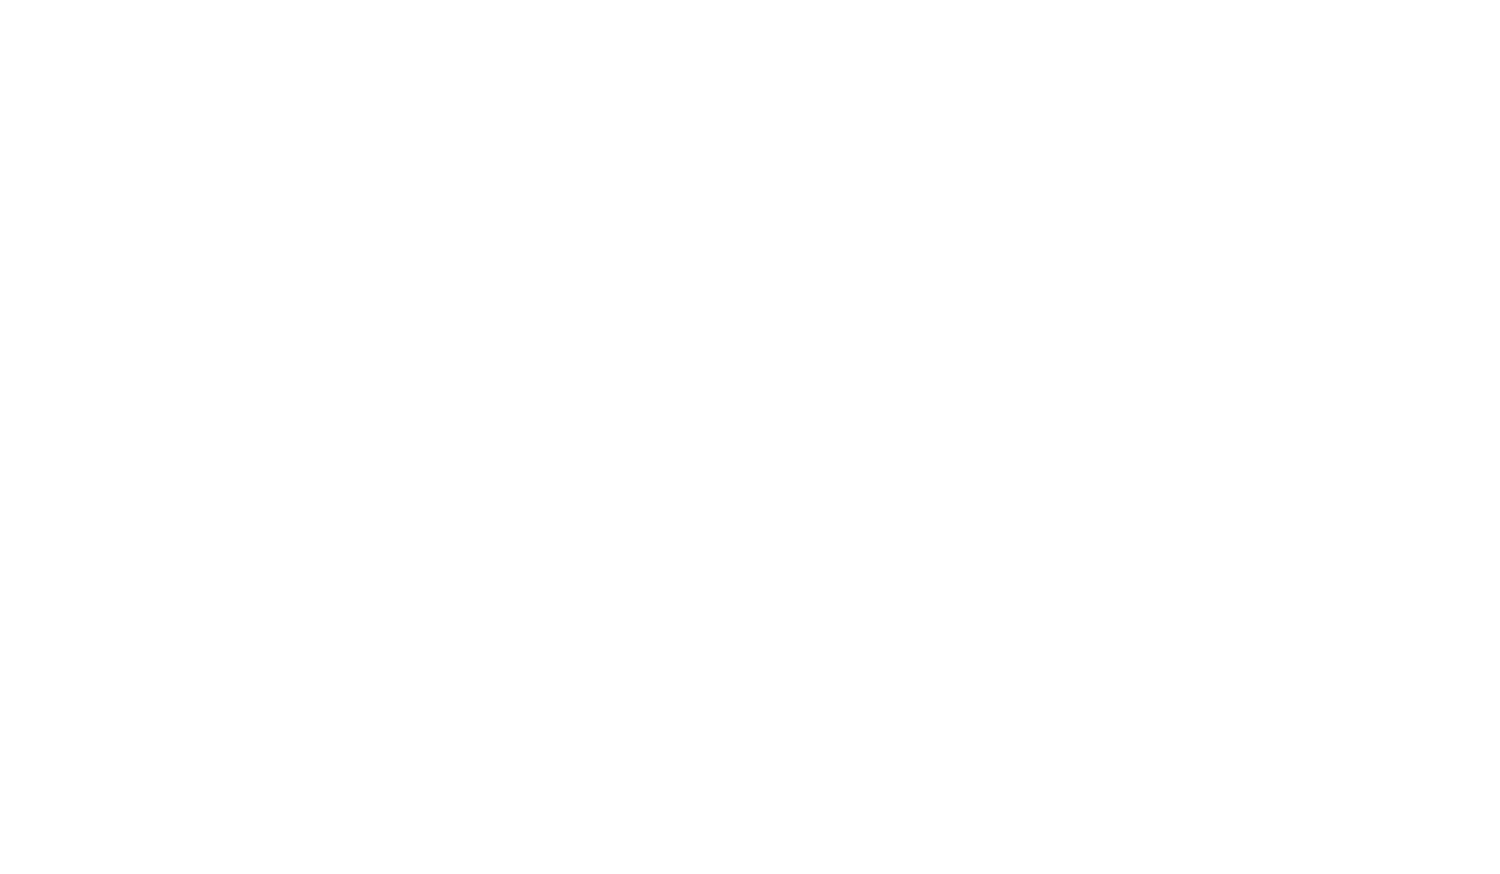 nCase Technologies